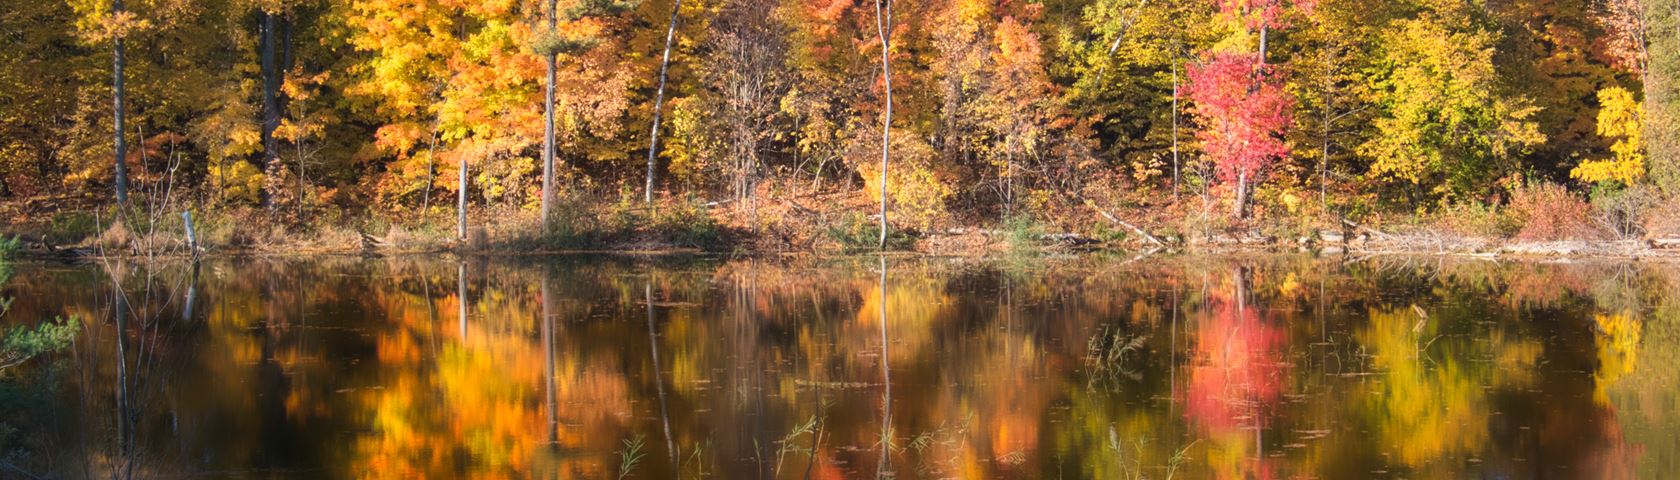 Fall reflected